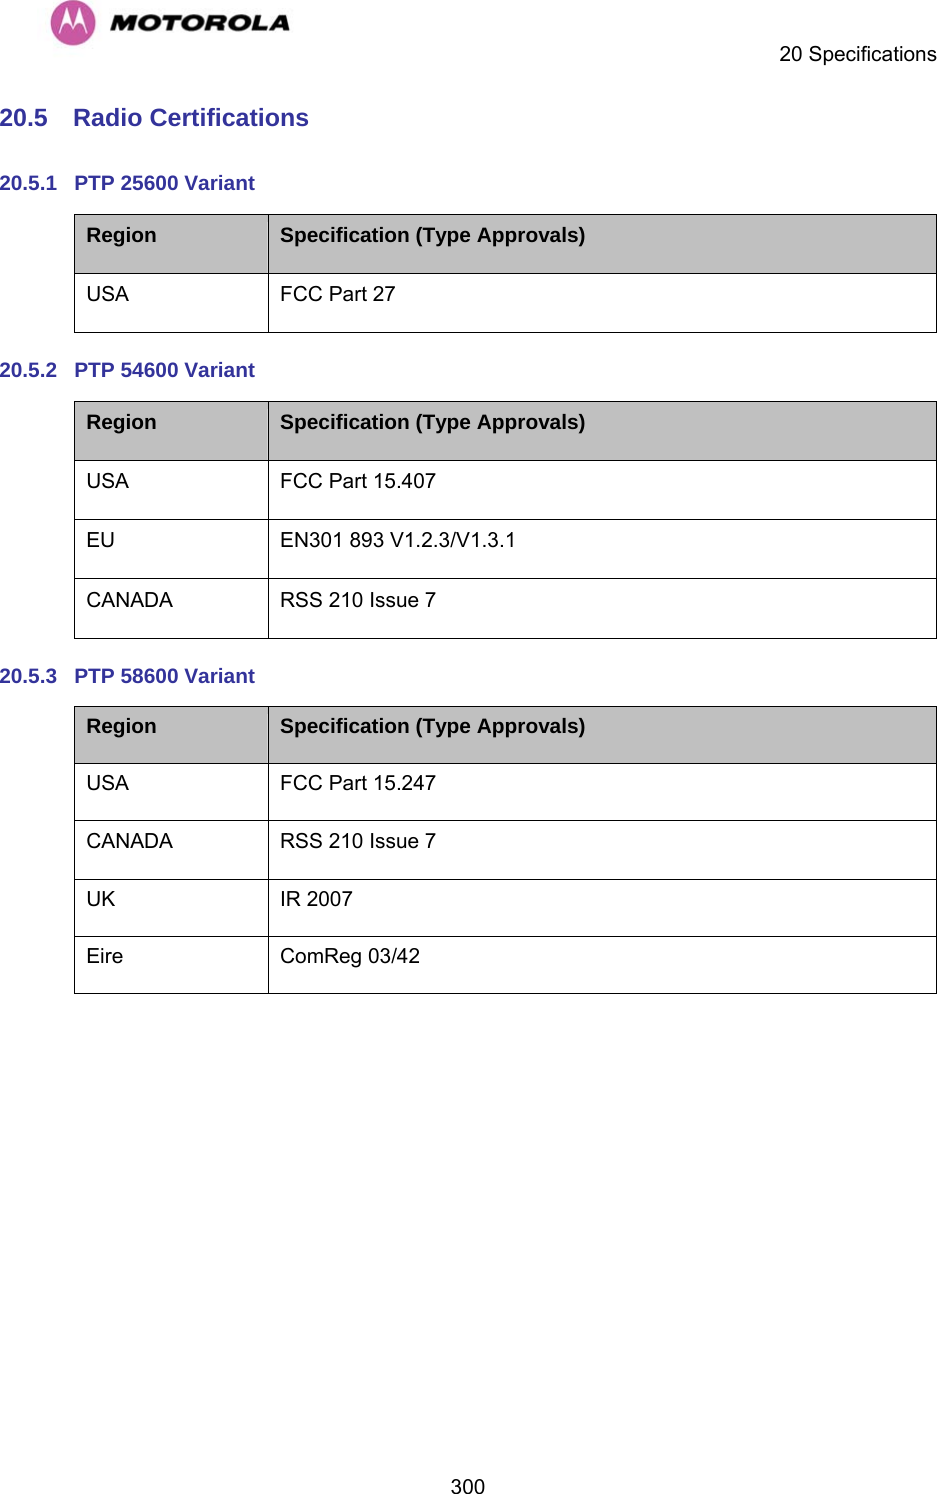    20 Specifications  30020.5  Radio Certifications  20.5.1  PTP 25600 Variant Region  Specification (Type Approvals) USA  FCC Part 27 20.5.2  PTP 54600 Variant Region  Specification (Type Approvals) USA  FCC Part 15.407 EU  EN301 893 V1.2.3/V1.3.1 CANADA  RSS 210 Issue 7 20.5.3  PTP 58600 Variant Region  Specification (Type Approvals) USA  FCC Part 15.247 CANADA  RSS 210 Issue 7 UK IR 2007 Eire ComReg 03/42 